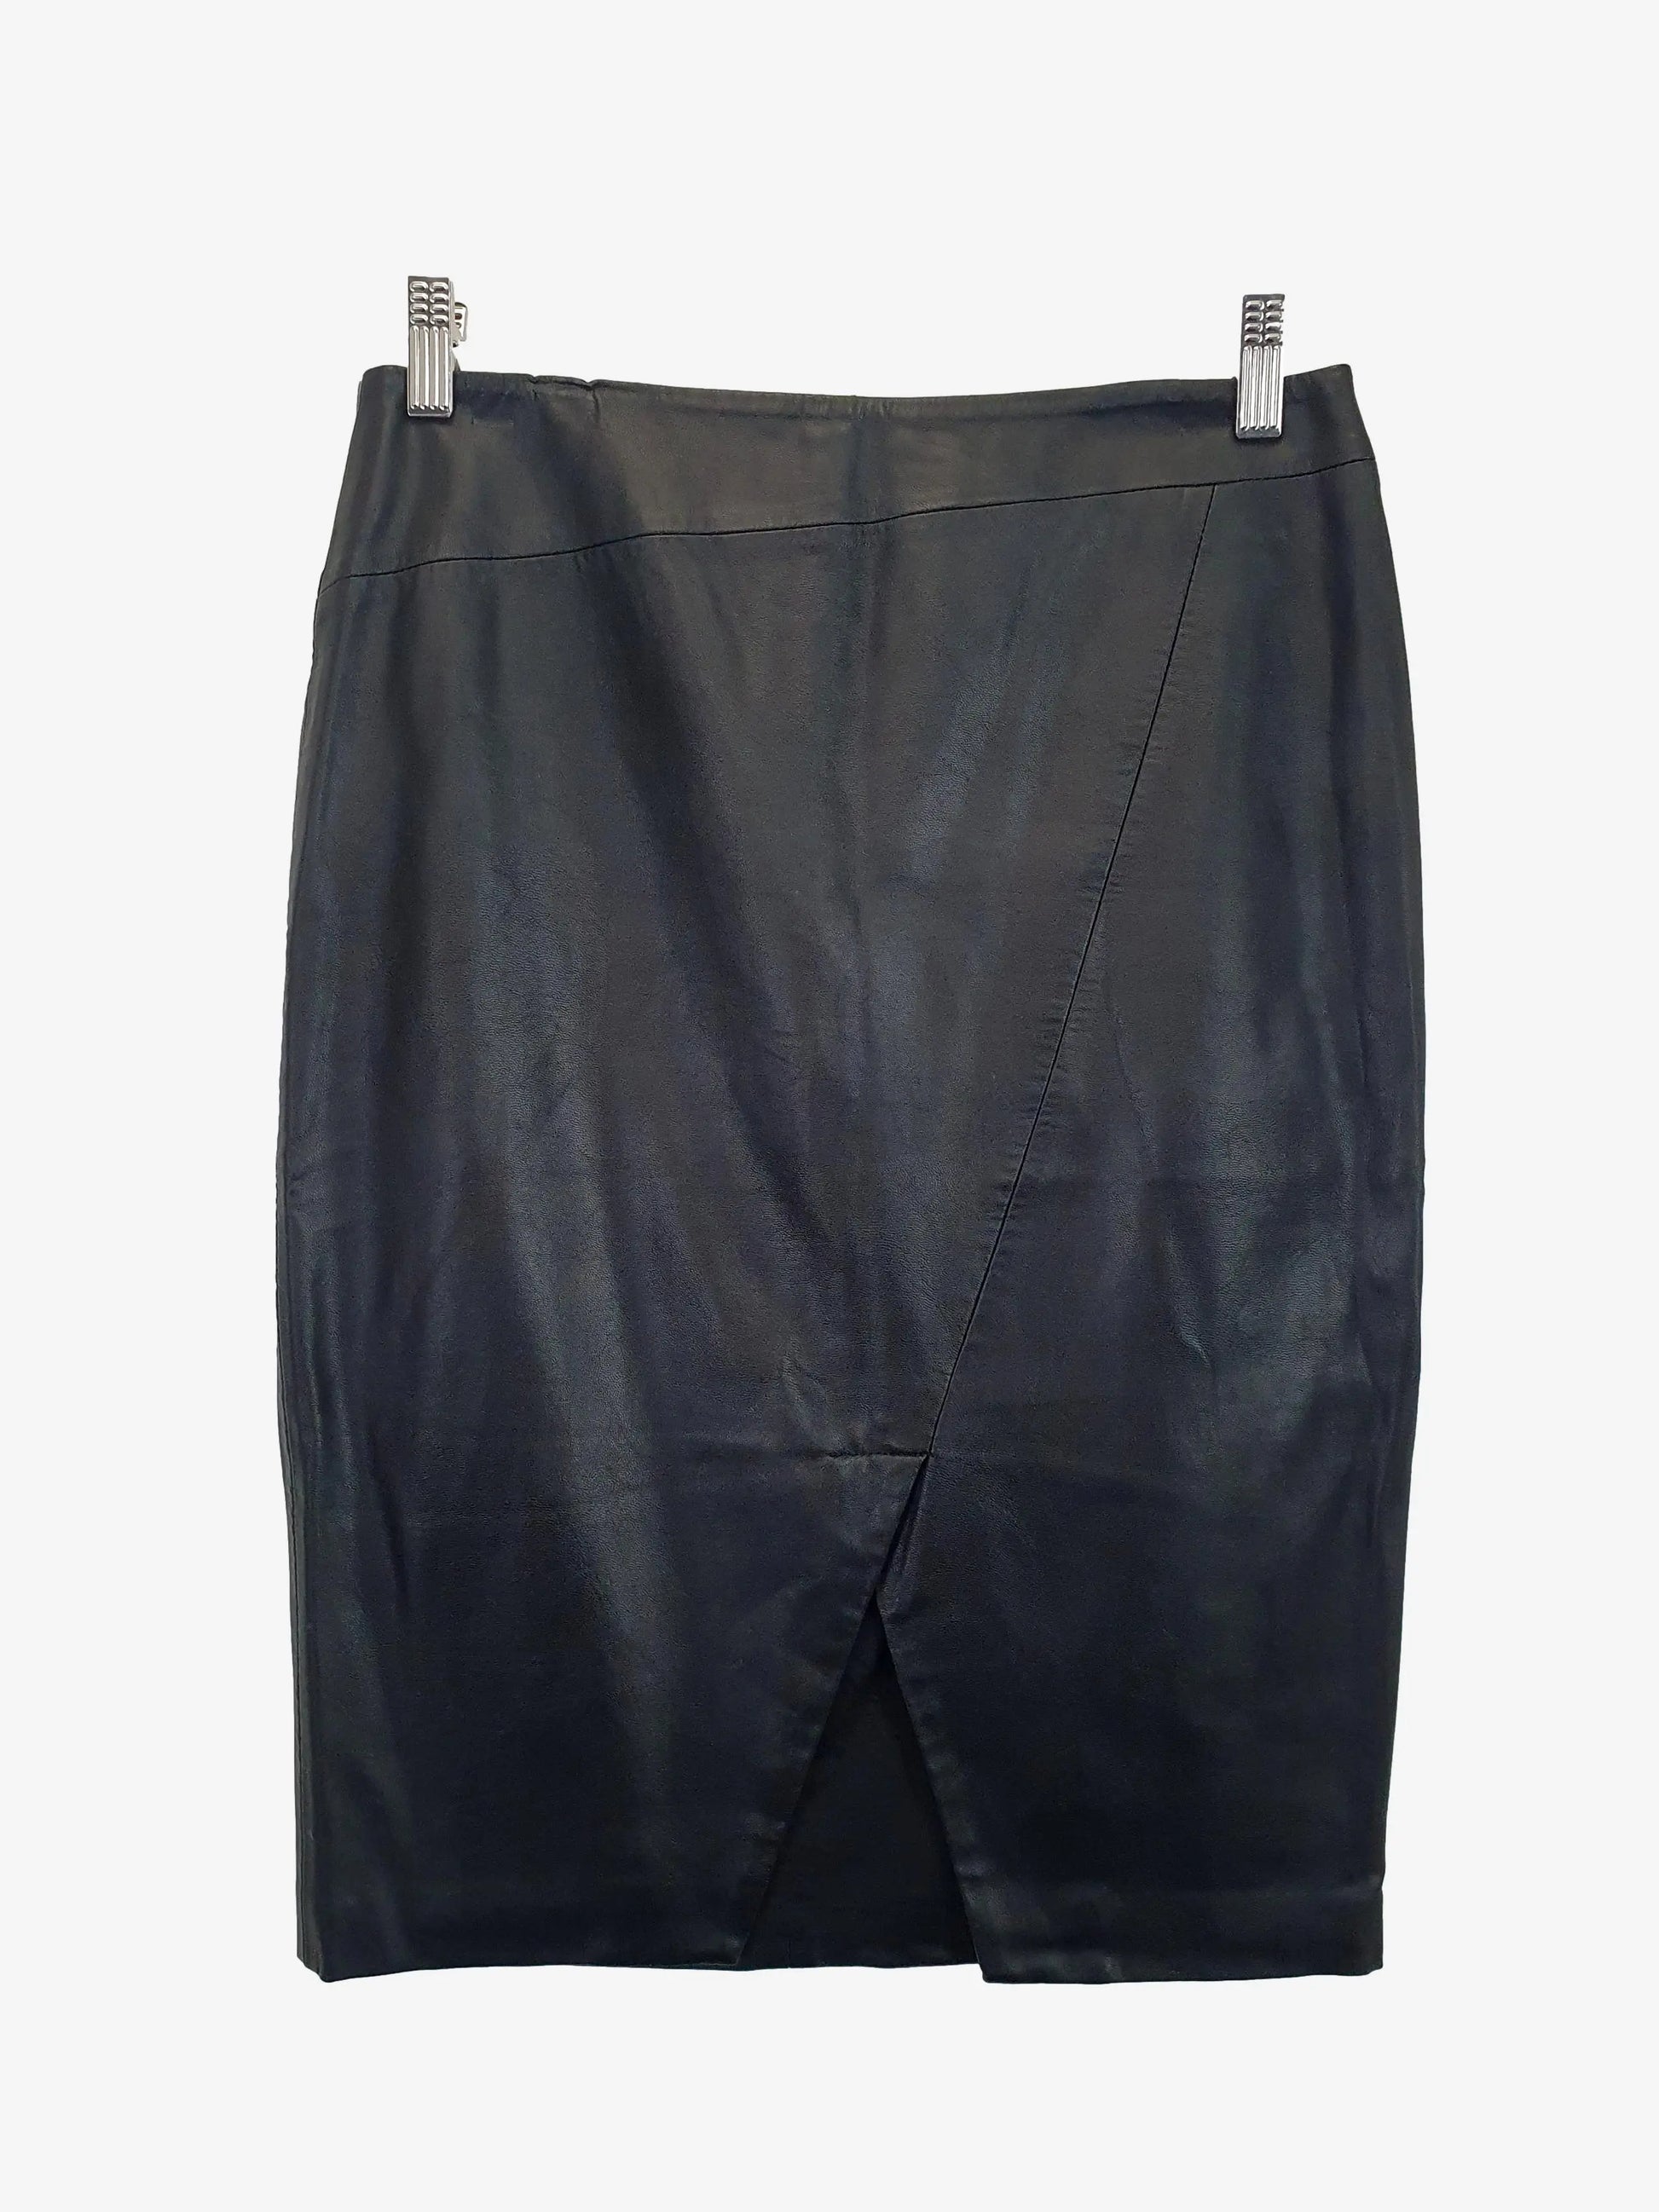 Saba Classic Staple Work Pants Size 8 – SwapUp